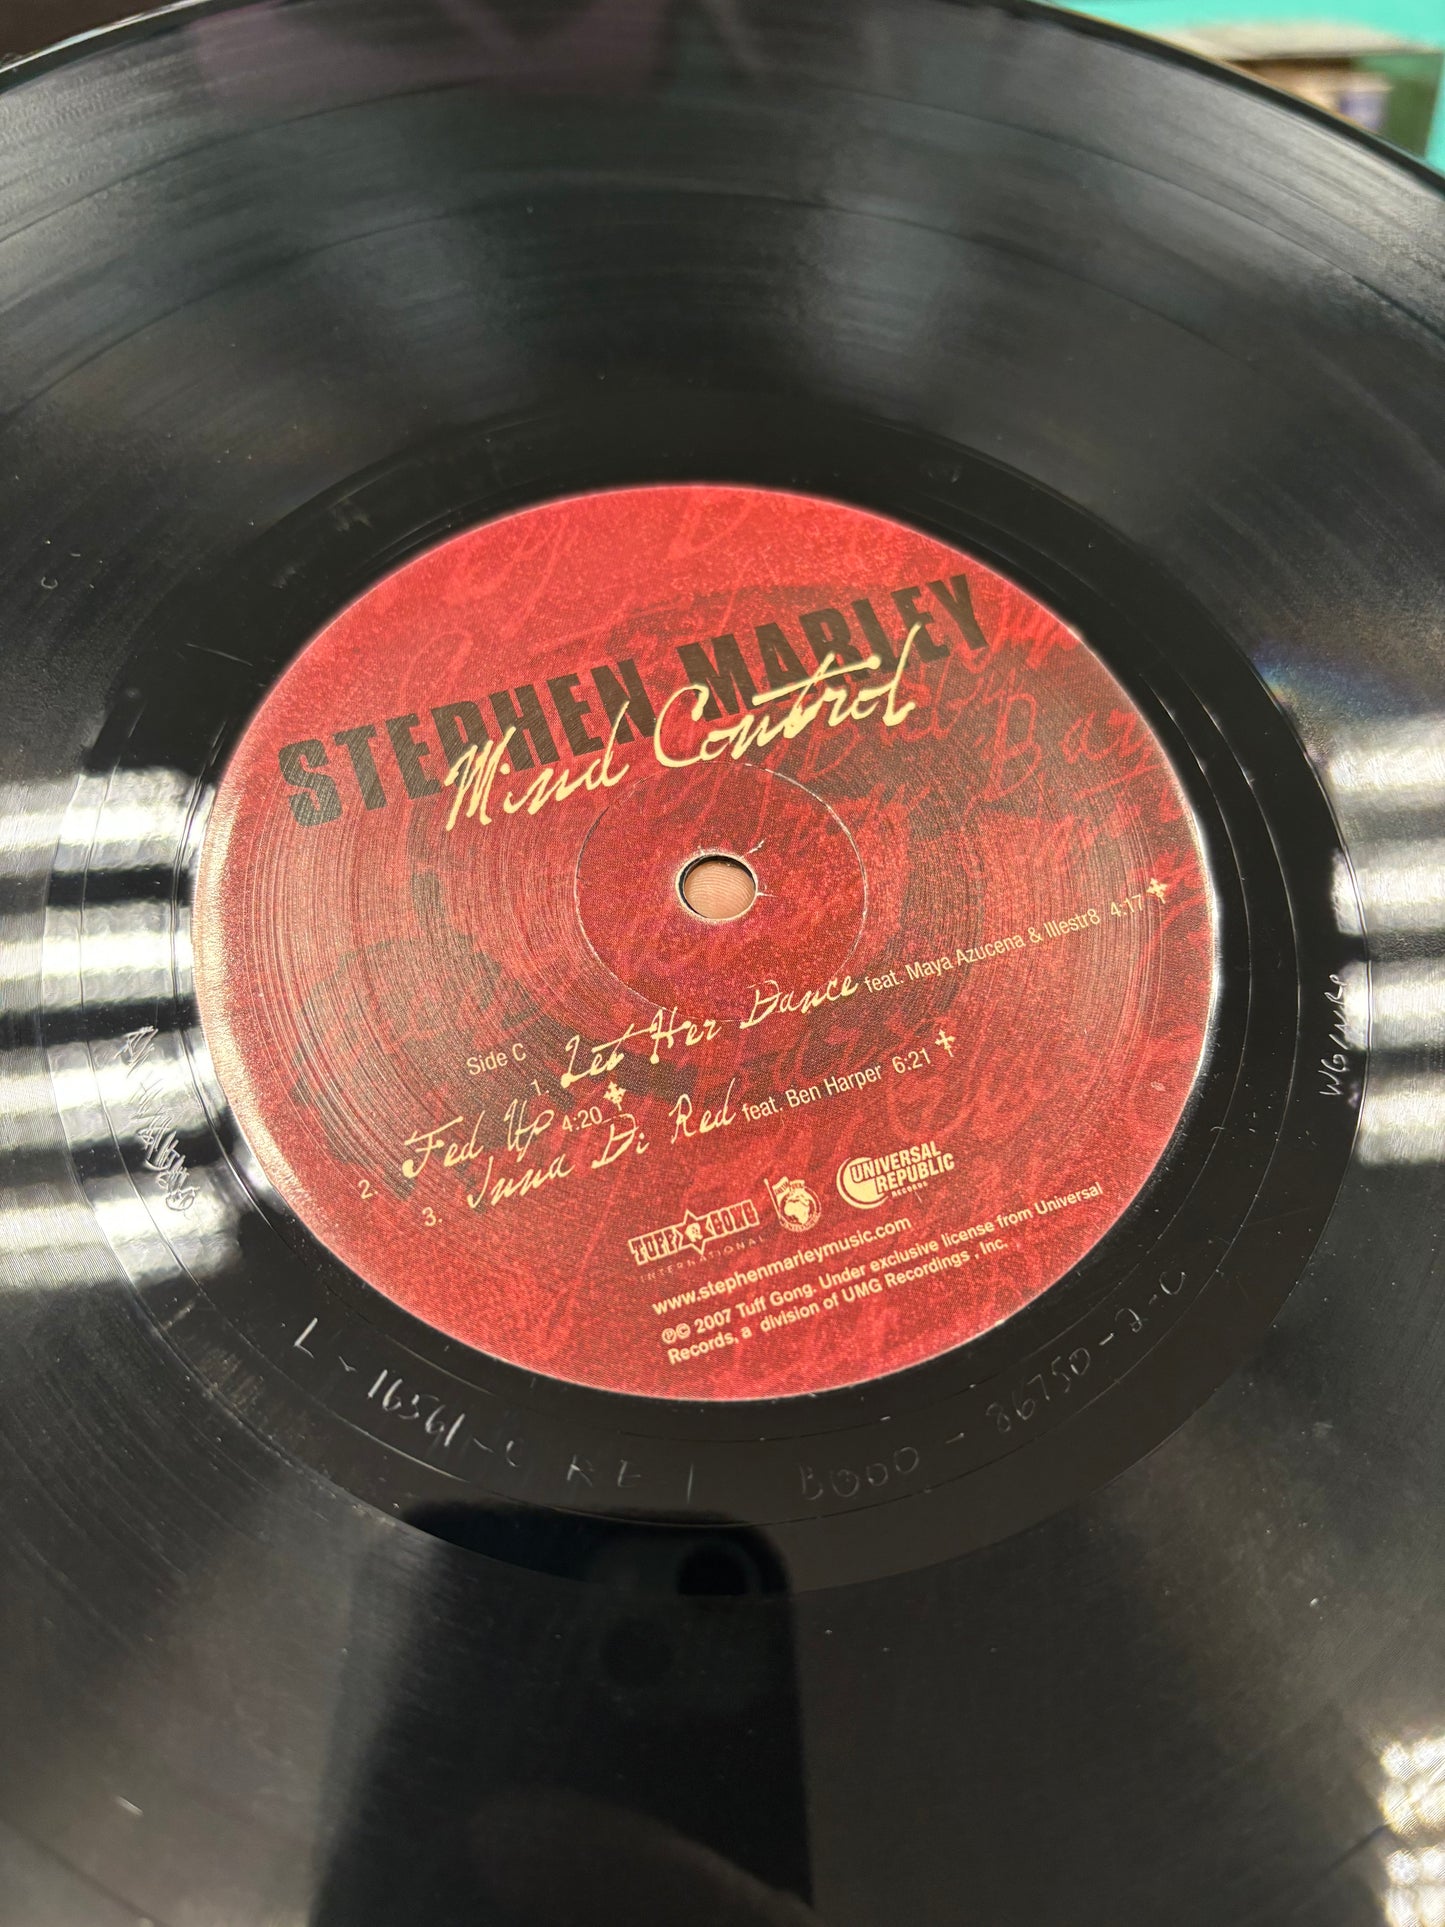 Stephen Marley: Mind Control, 2LP, Only vinyl pressing, US 2007